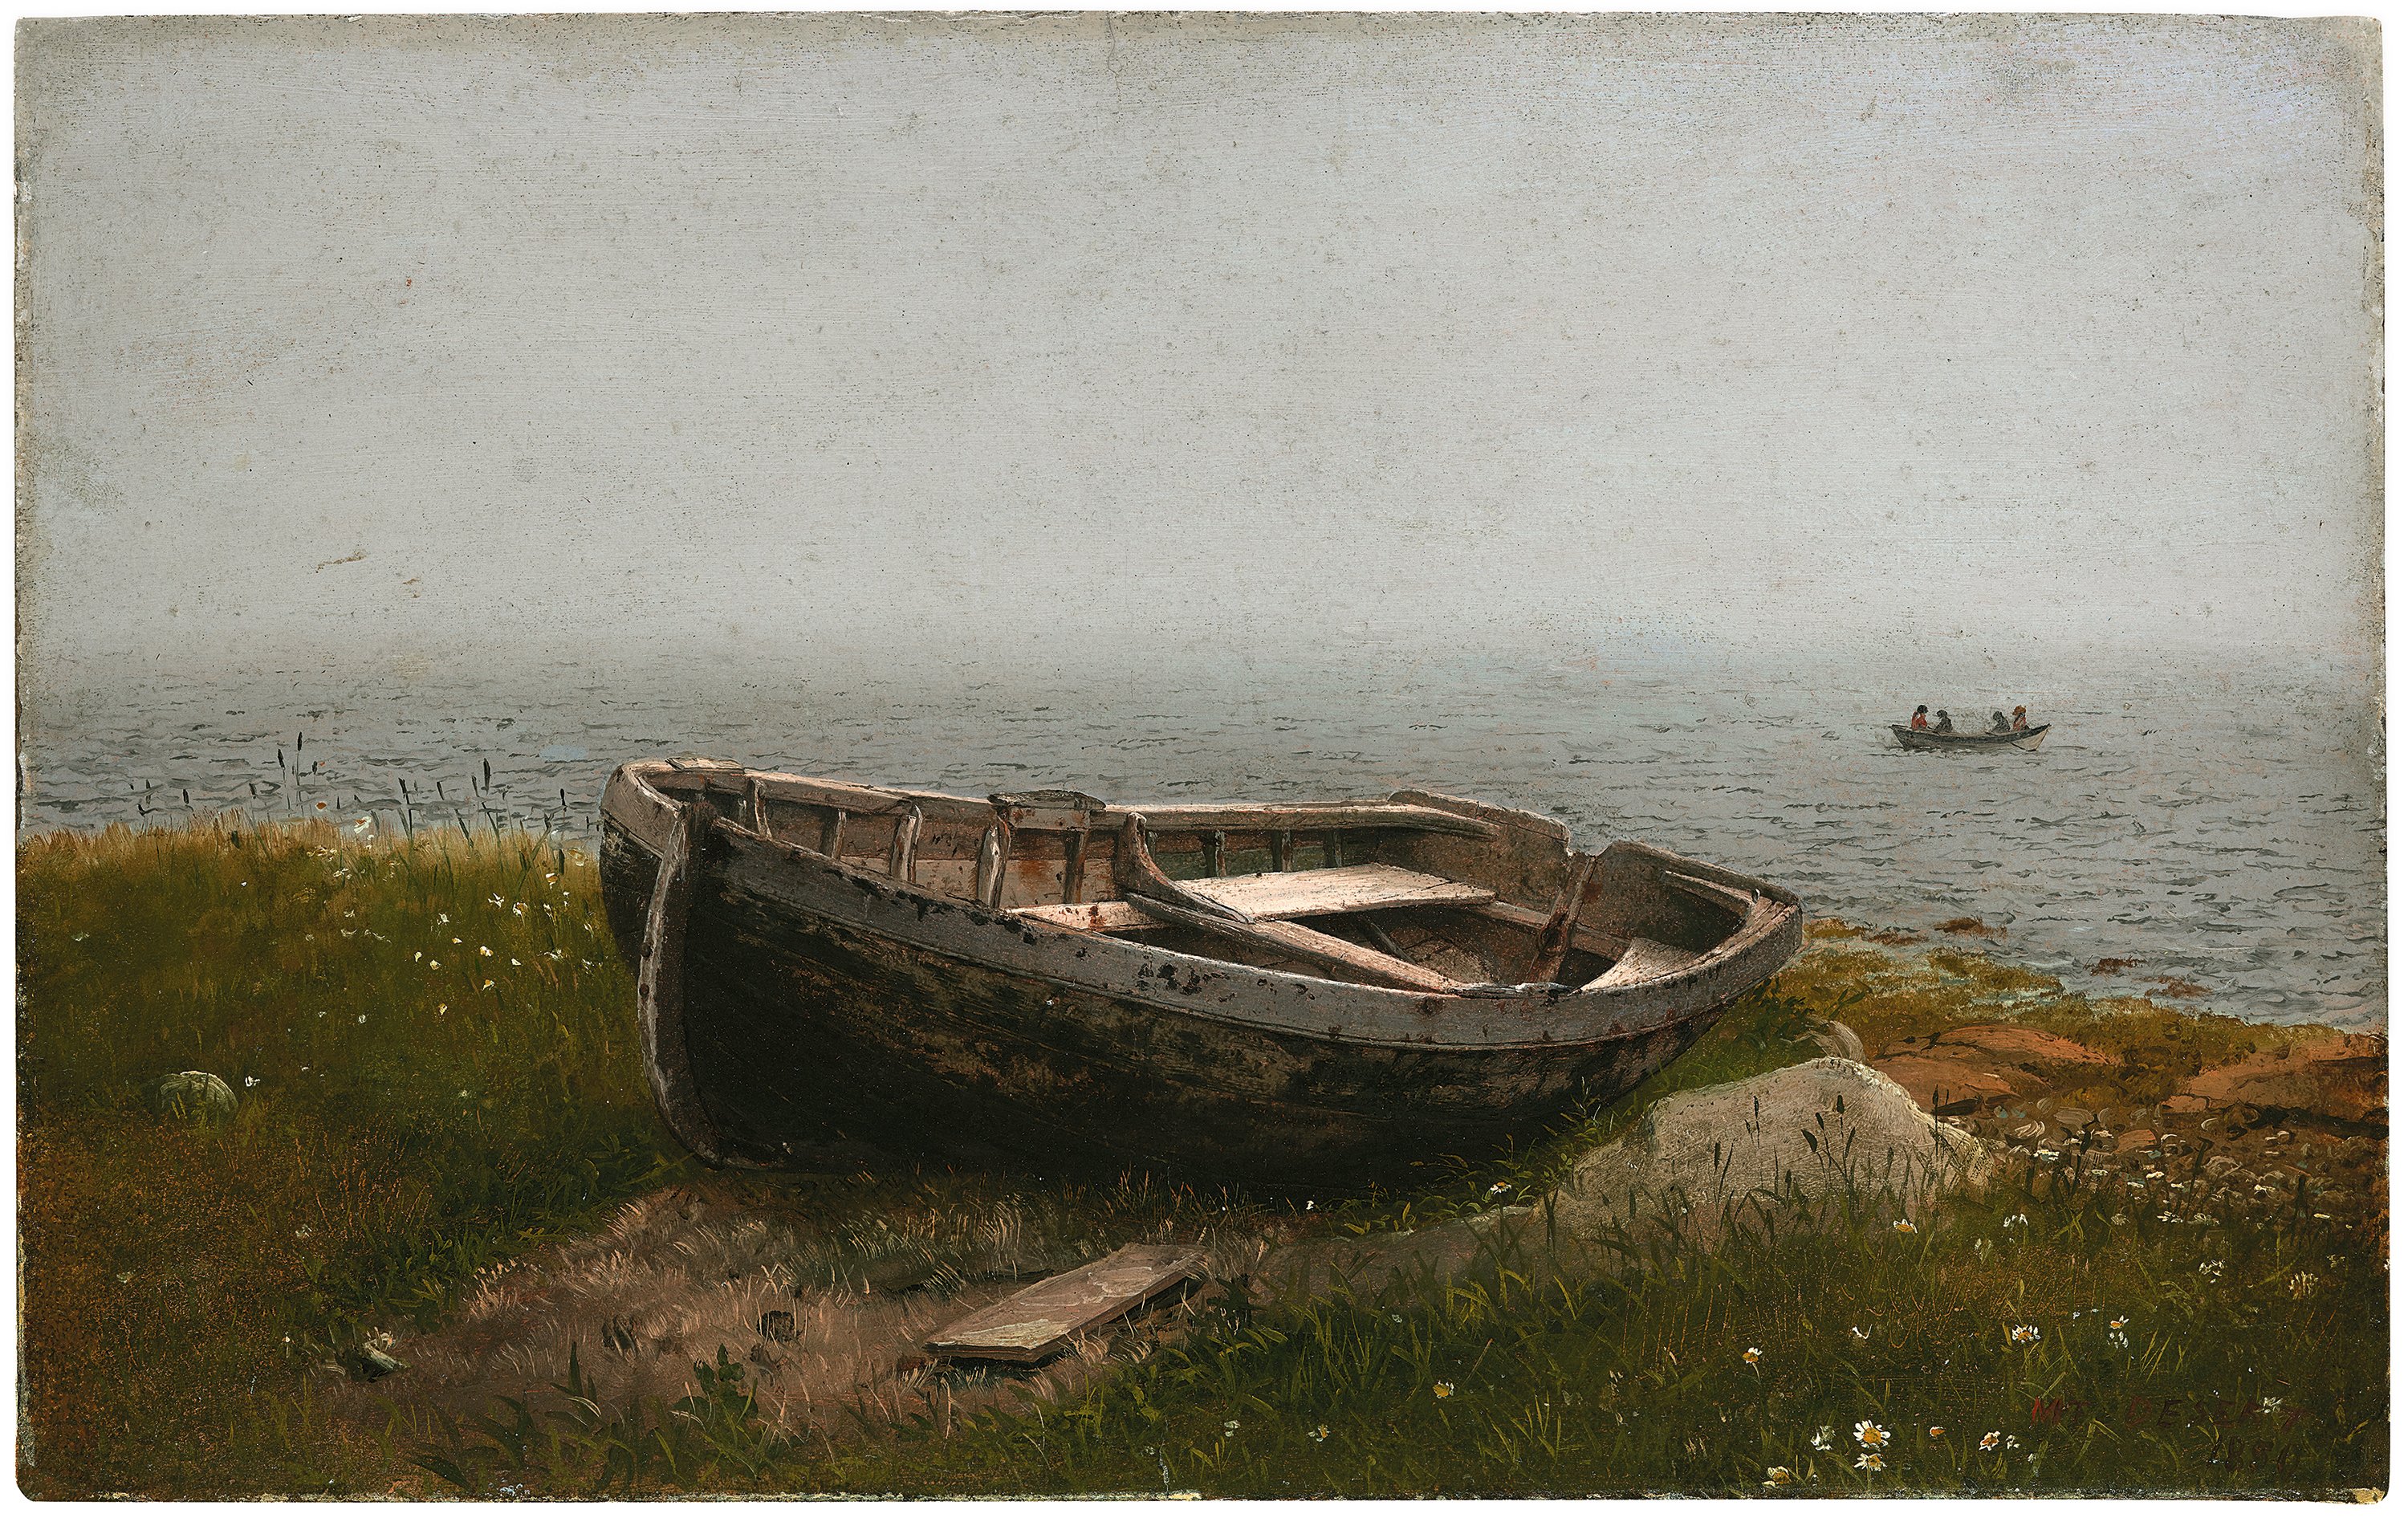 Abandoned Skiff. Bote abandonado, 1850